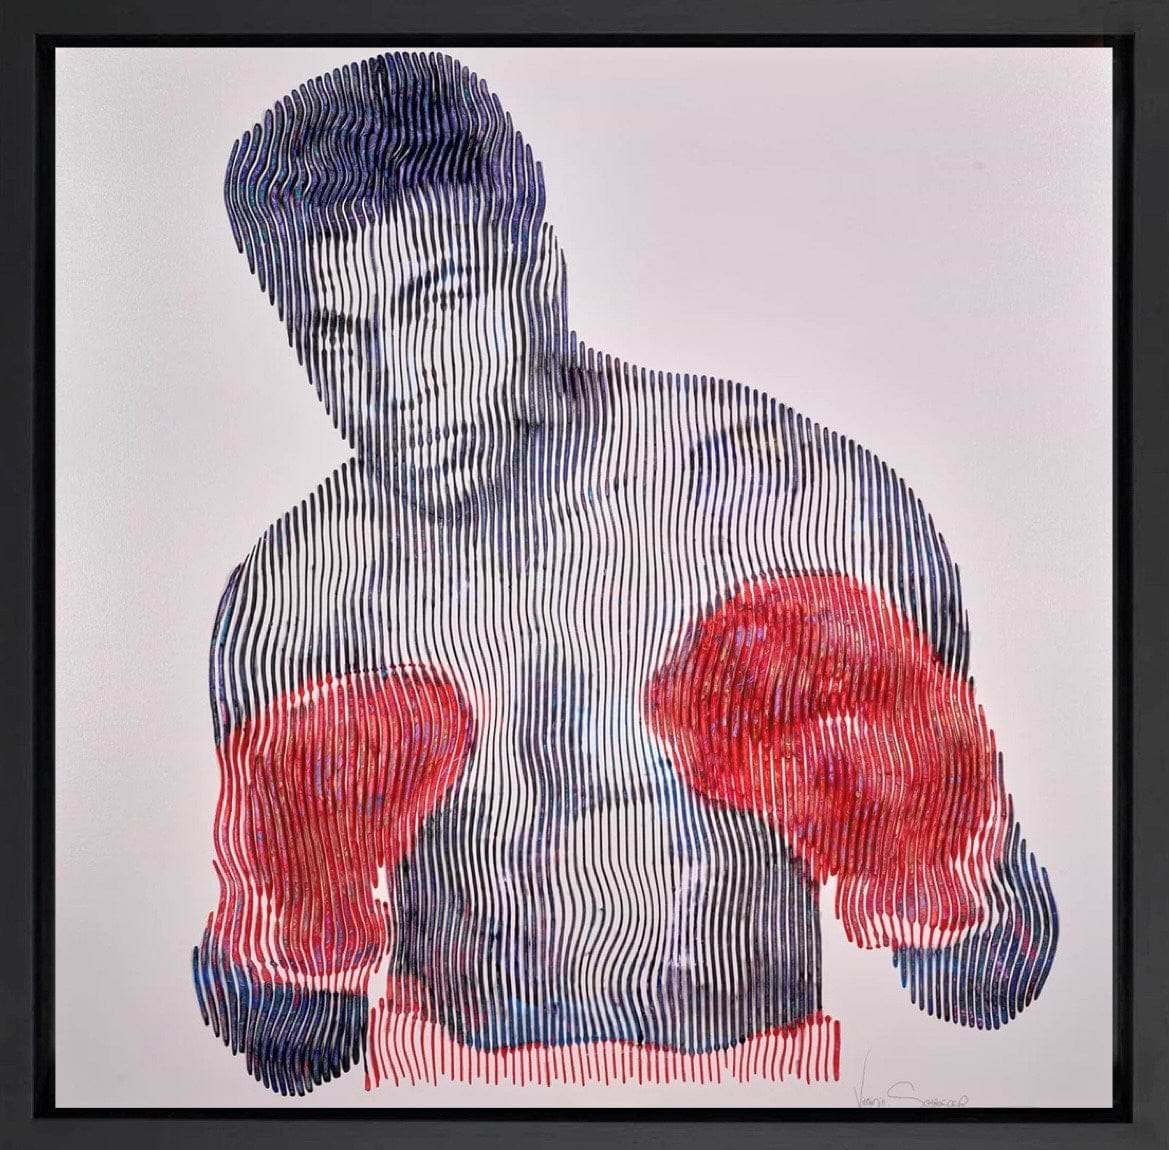 Ali The Strongest